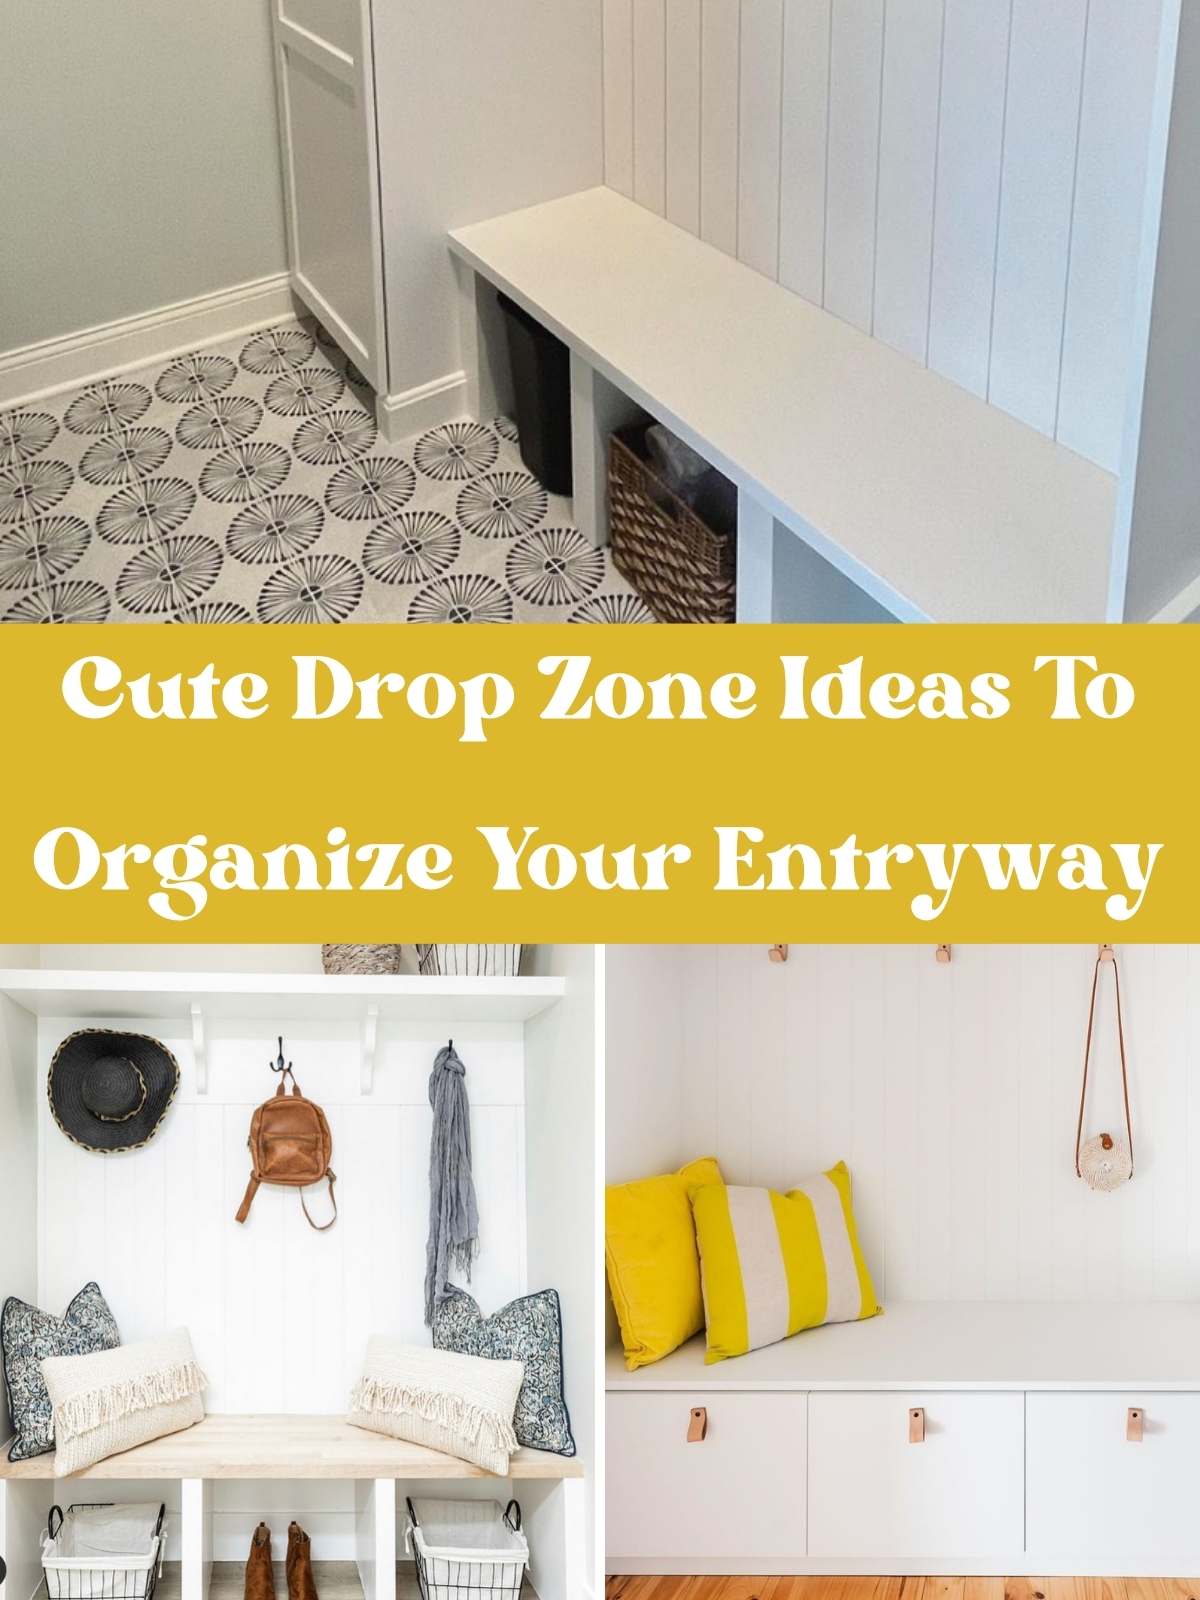 Cute Bench Ideas To Organize Your Entryway.